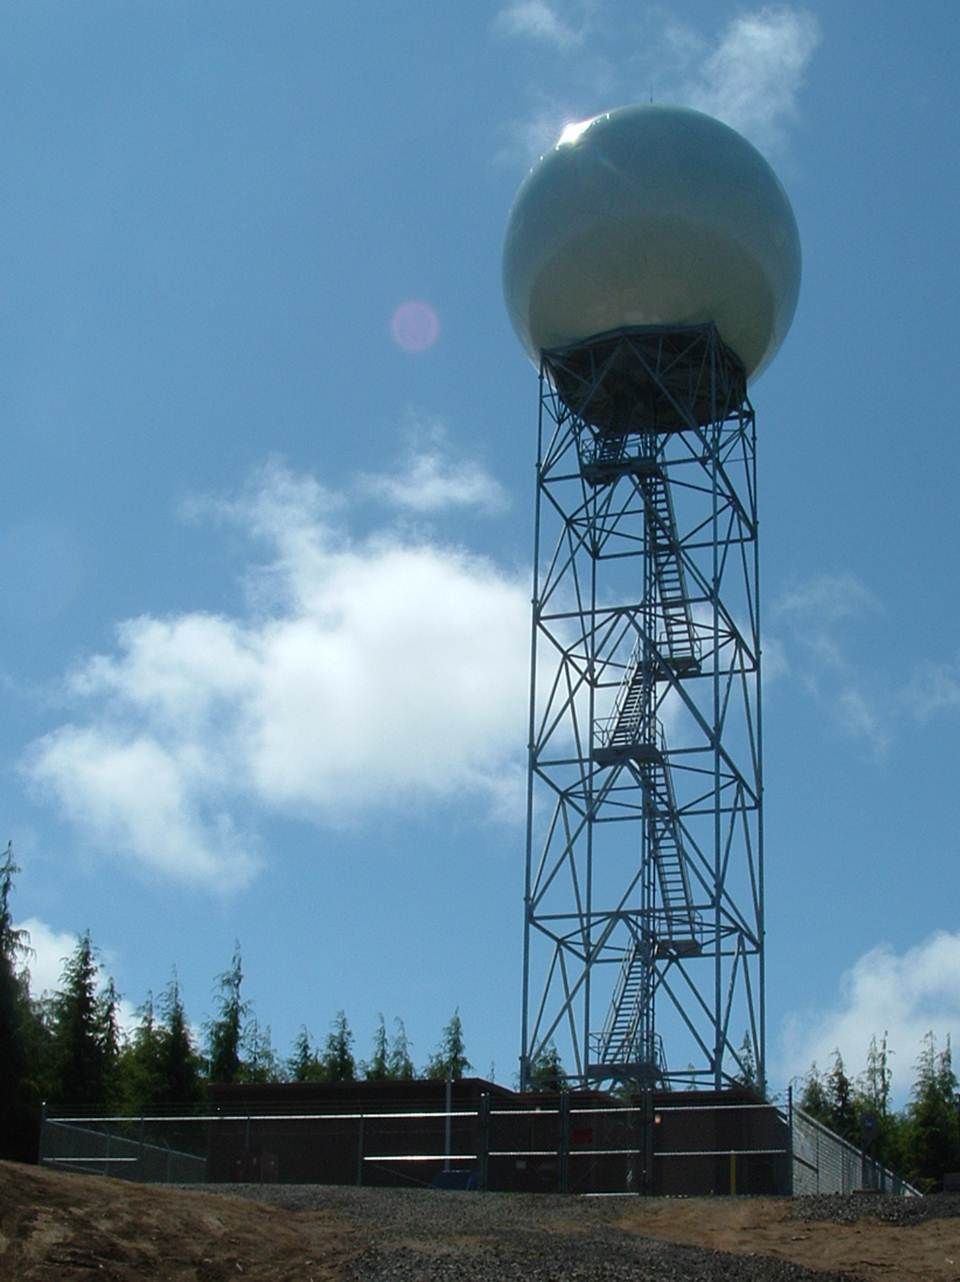 National Weather Service Network Radar Serving Coastal Washington